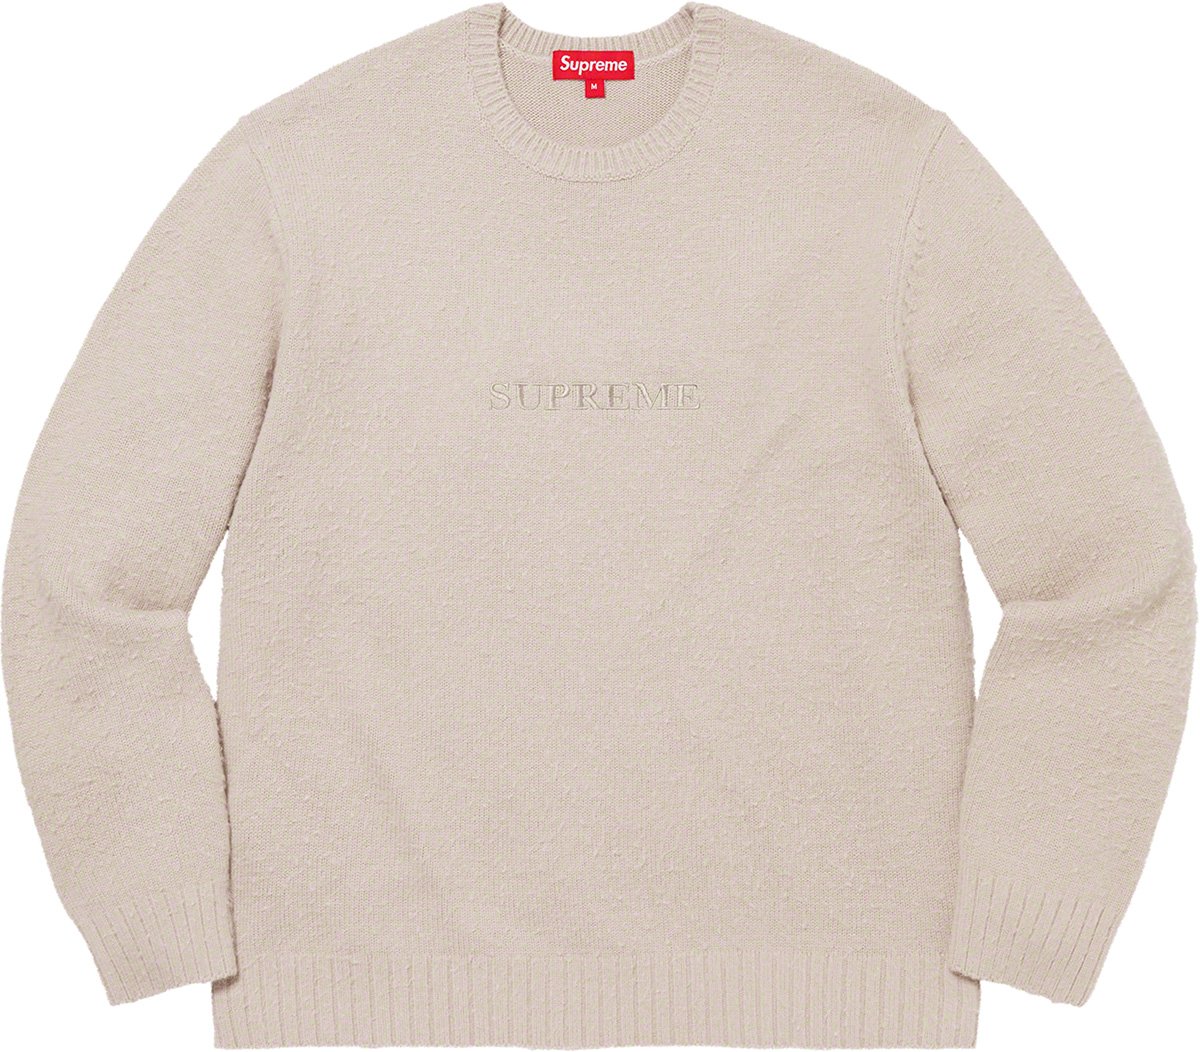 Pilled Sweater - fall winter 2021 - Supreme